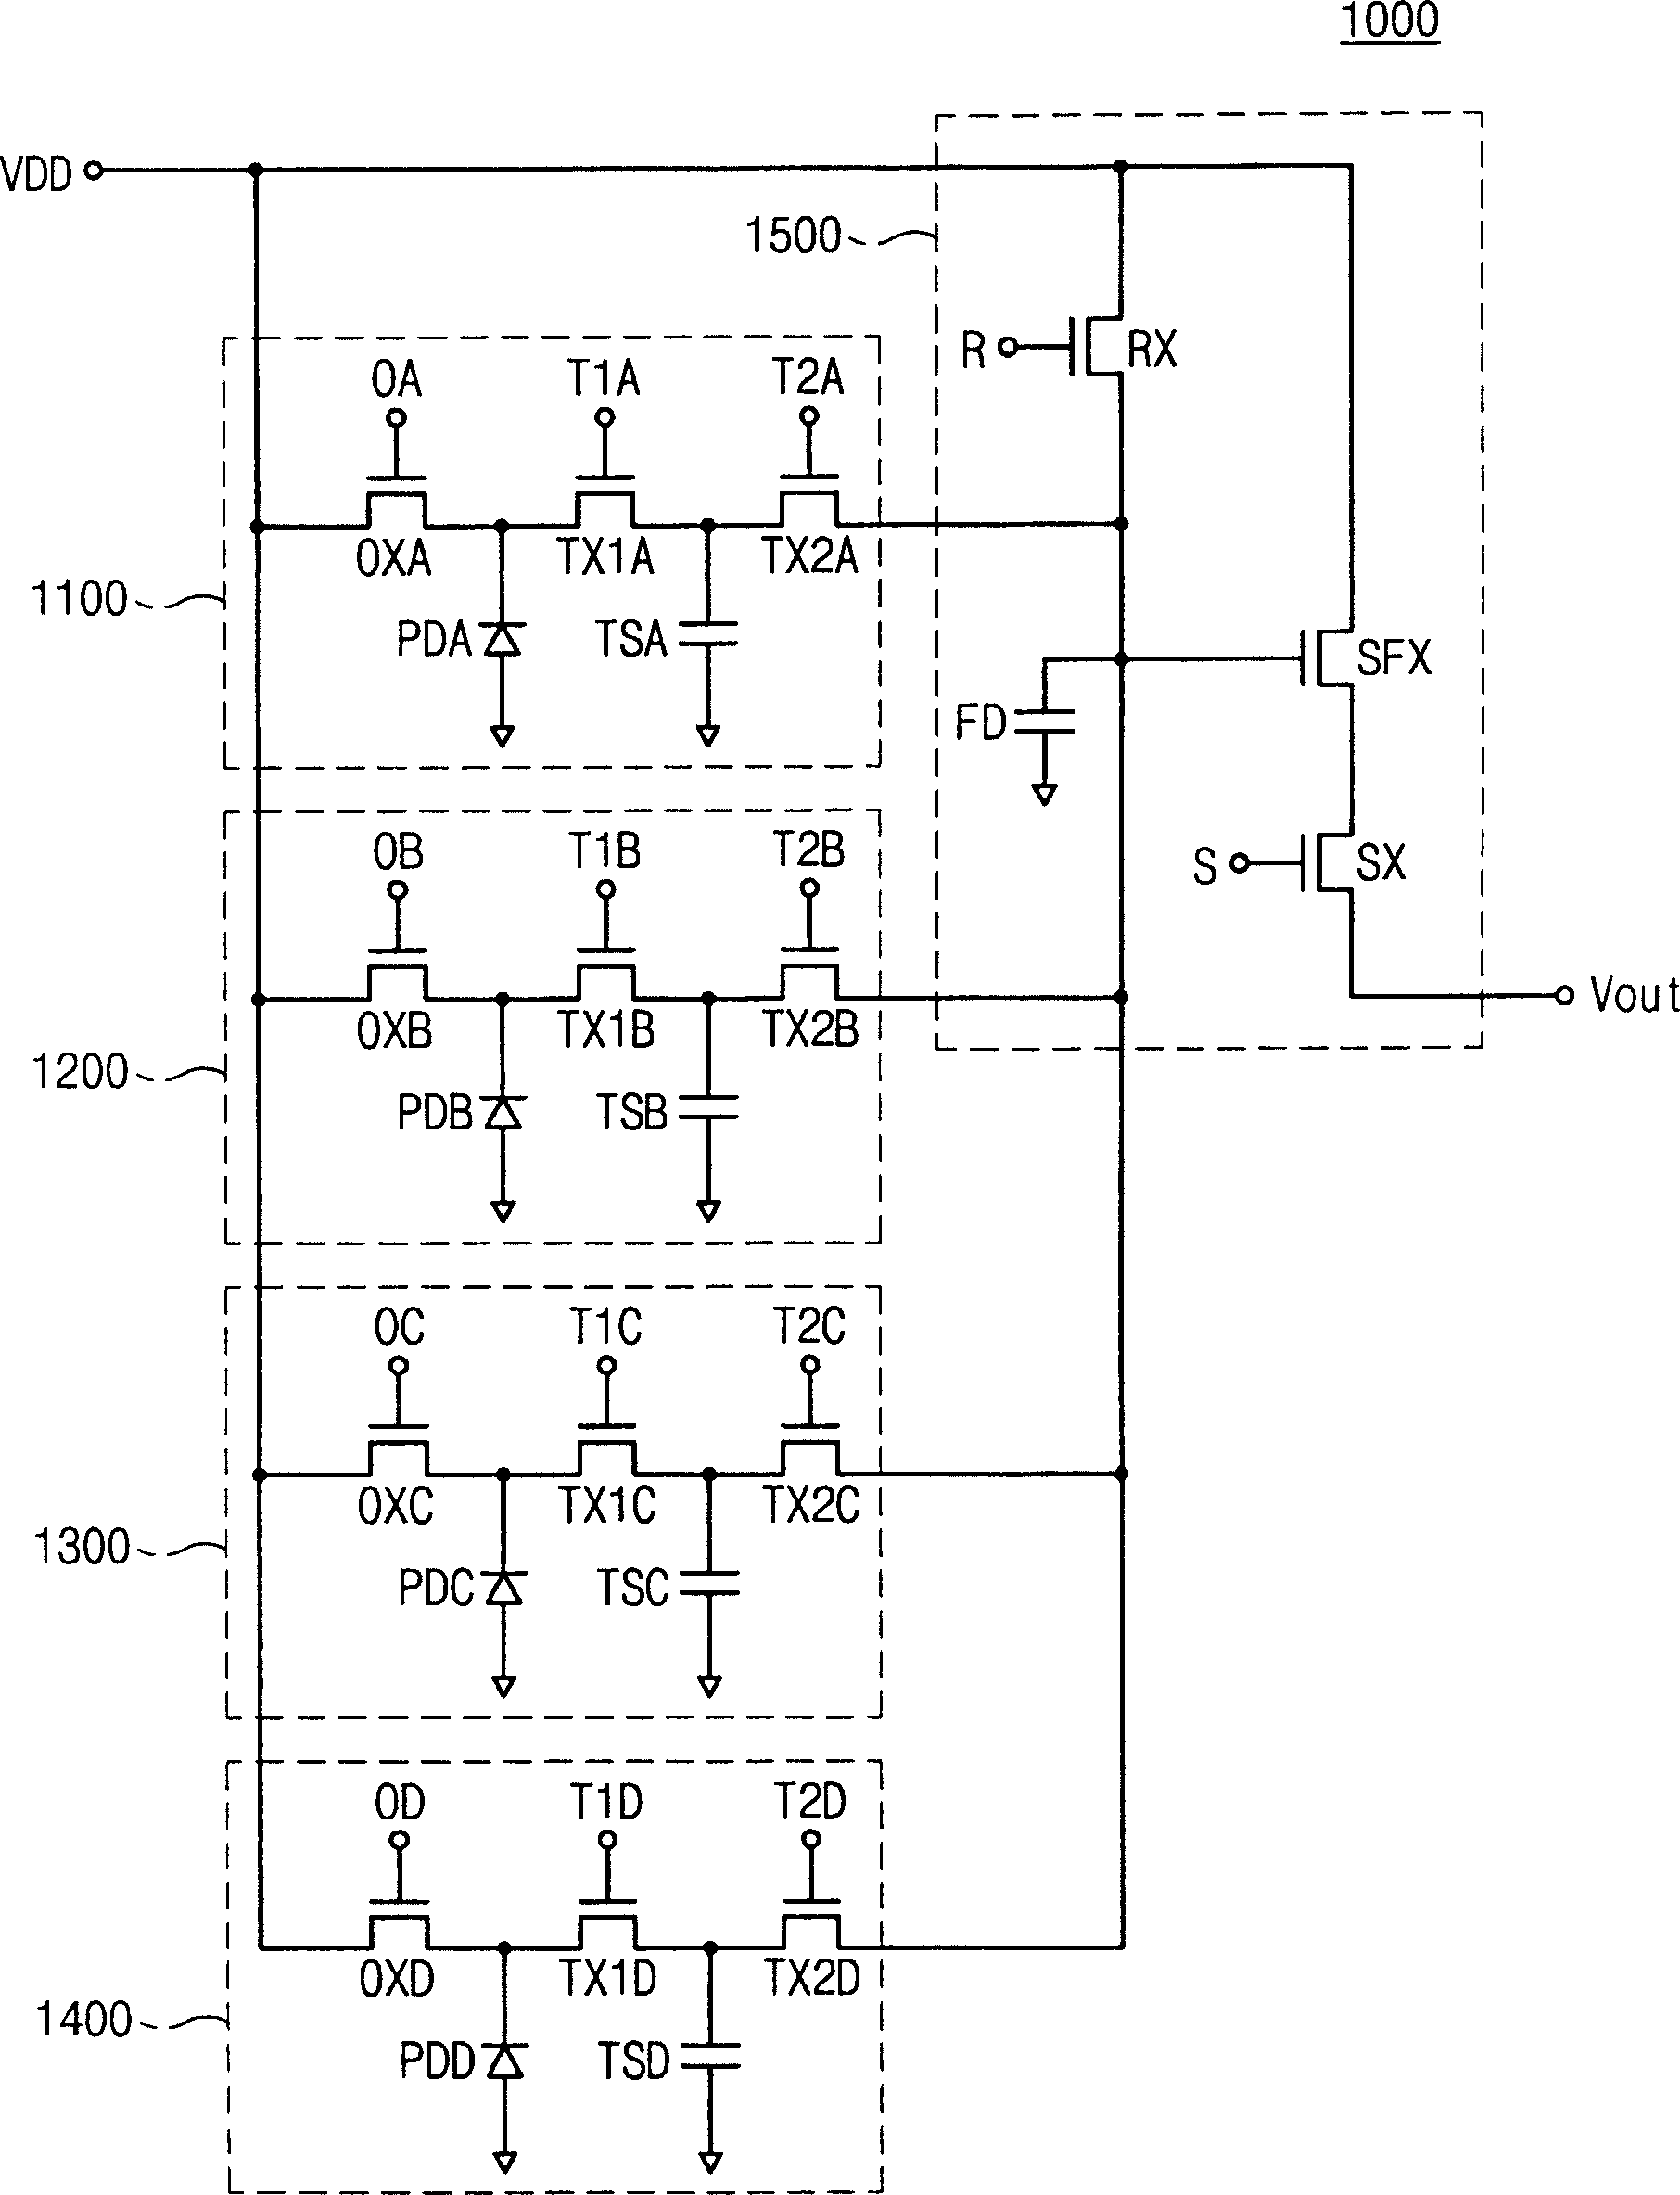 Image sensor with shared voltage converter for global shutter operation